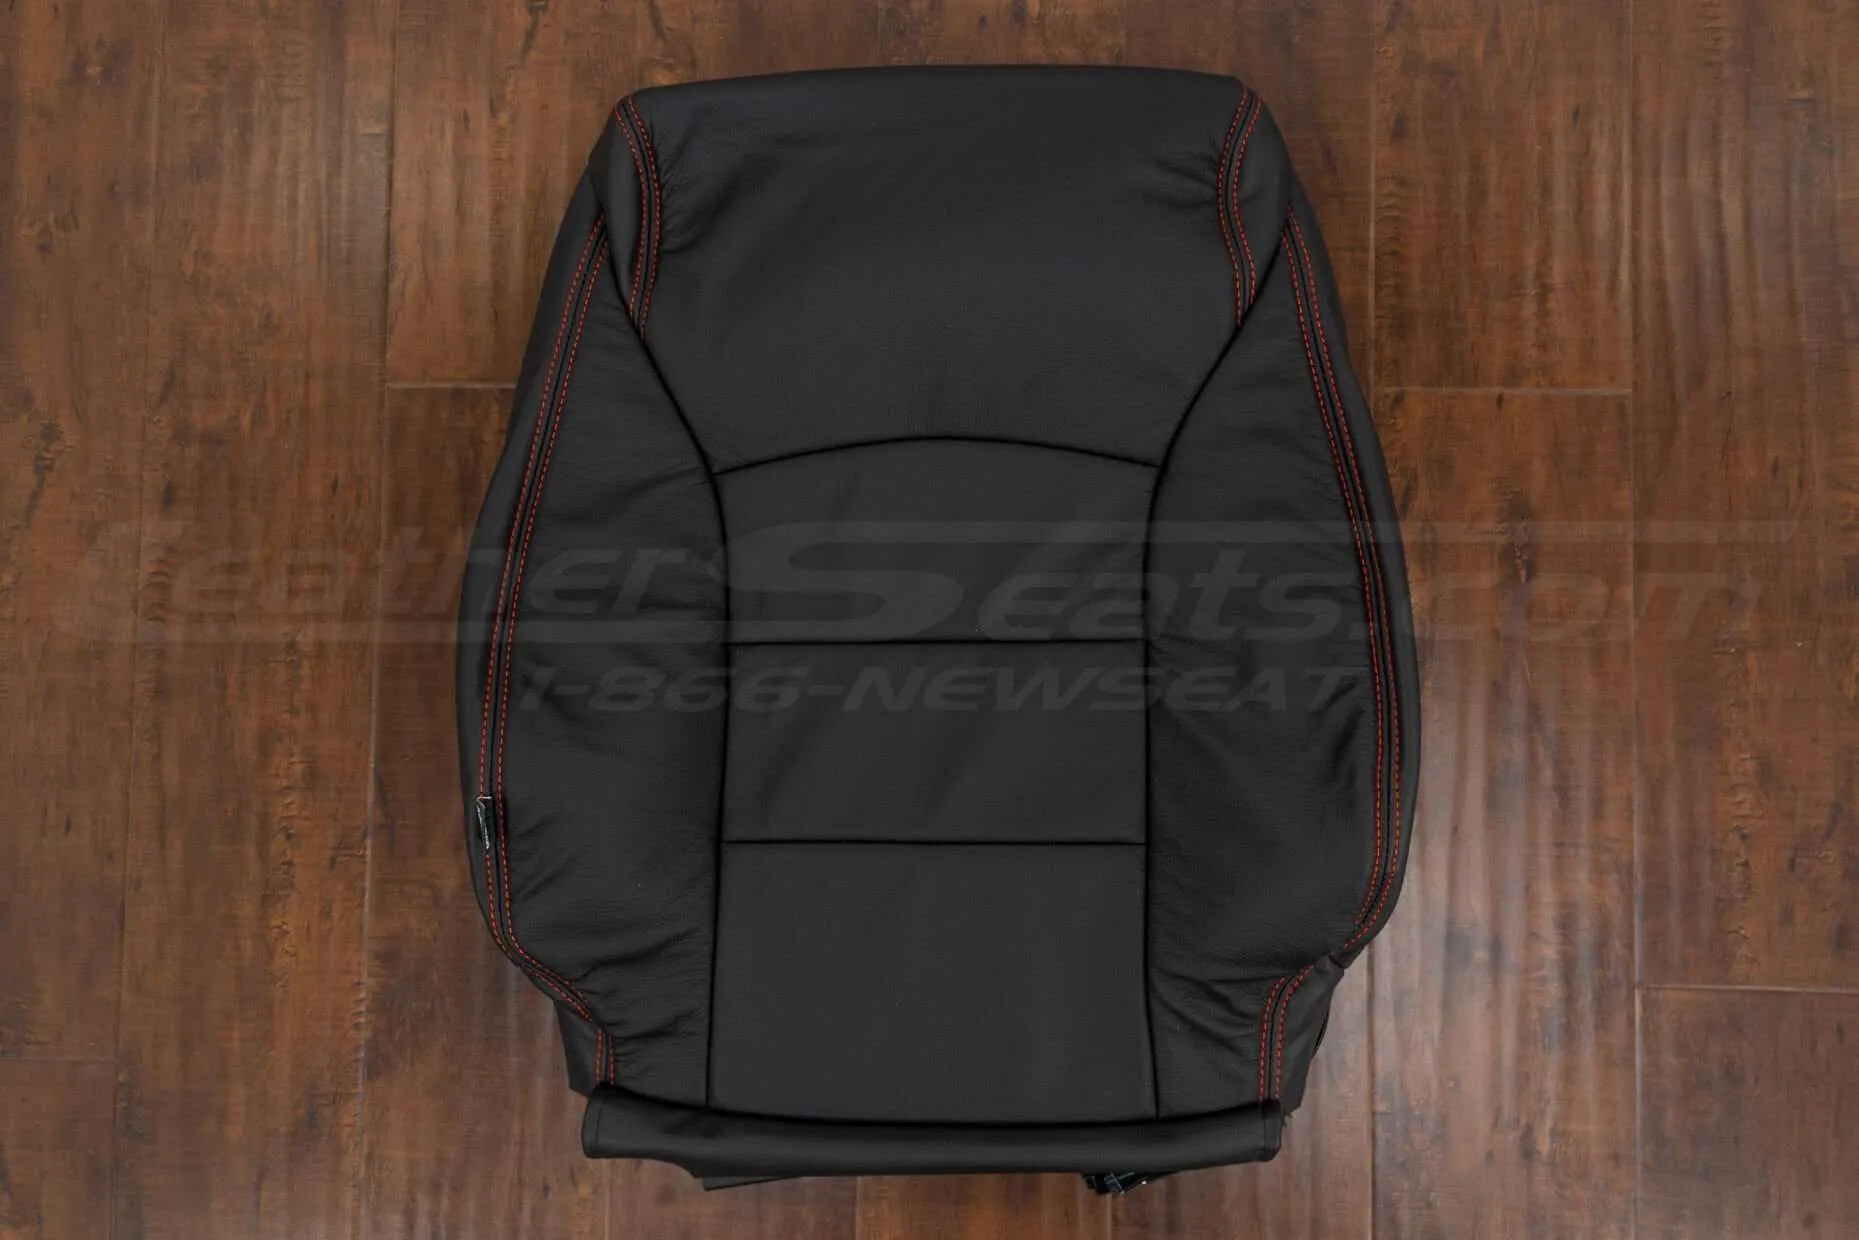 Chevrolet Cruze front backrest upholstery